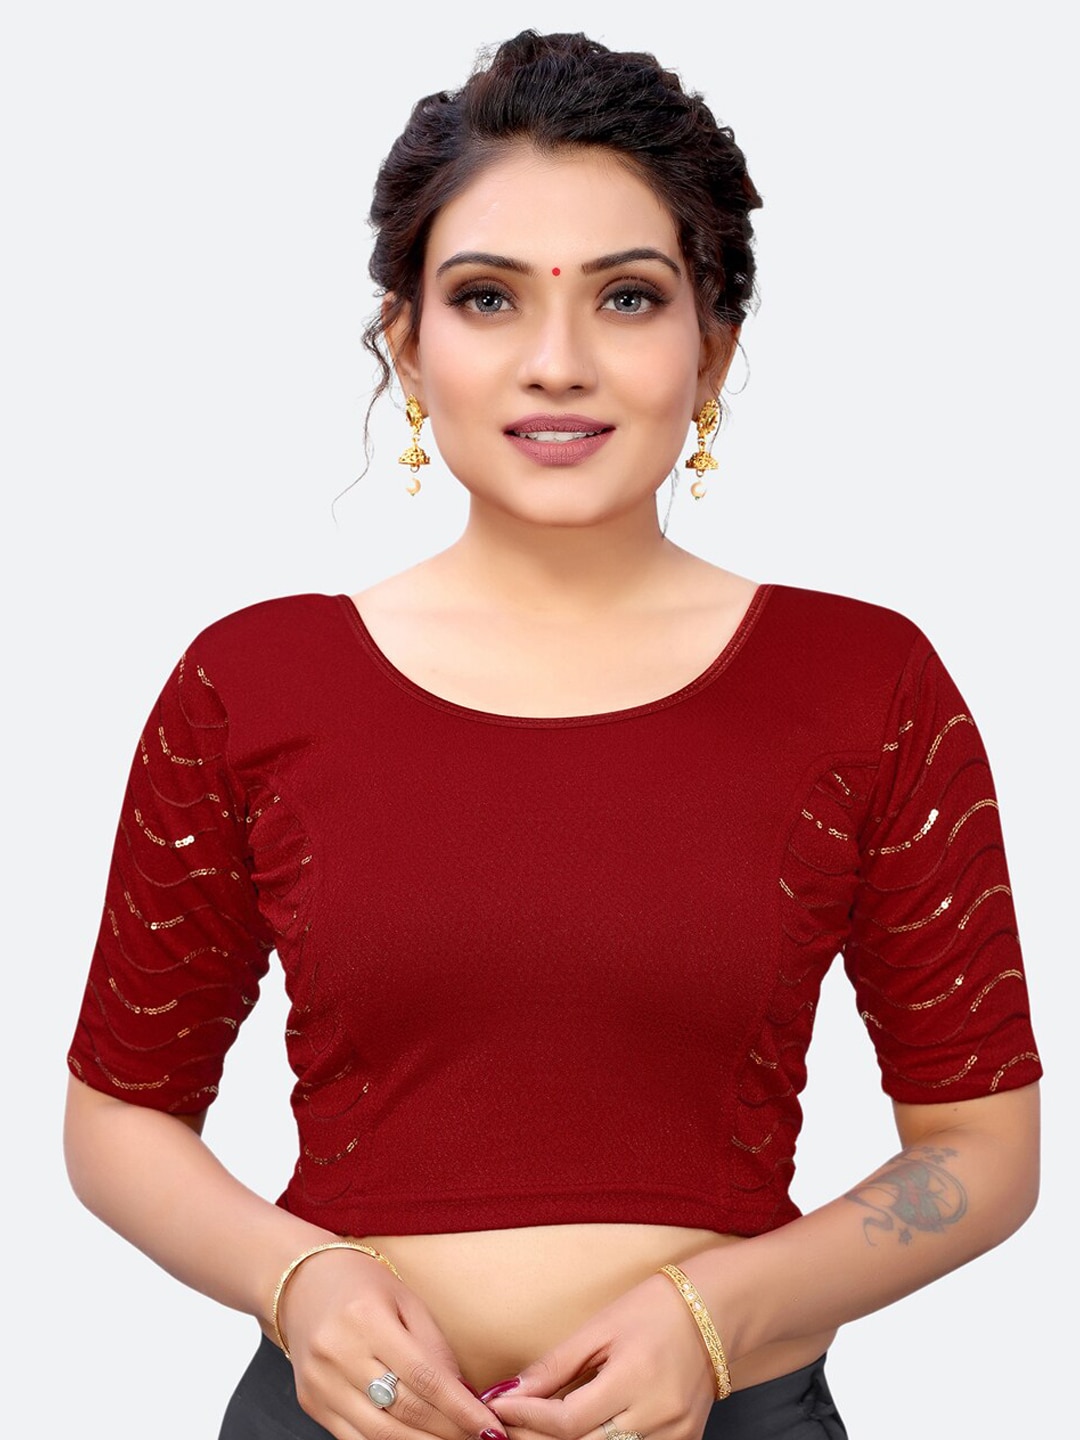 SIRIL Women Maroon Embellished Saree Blouse Price in India